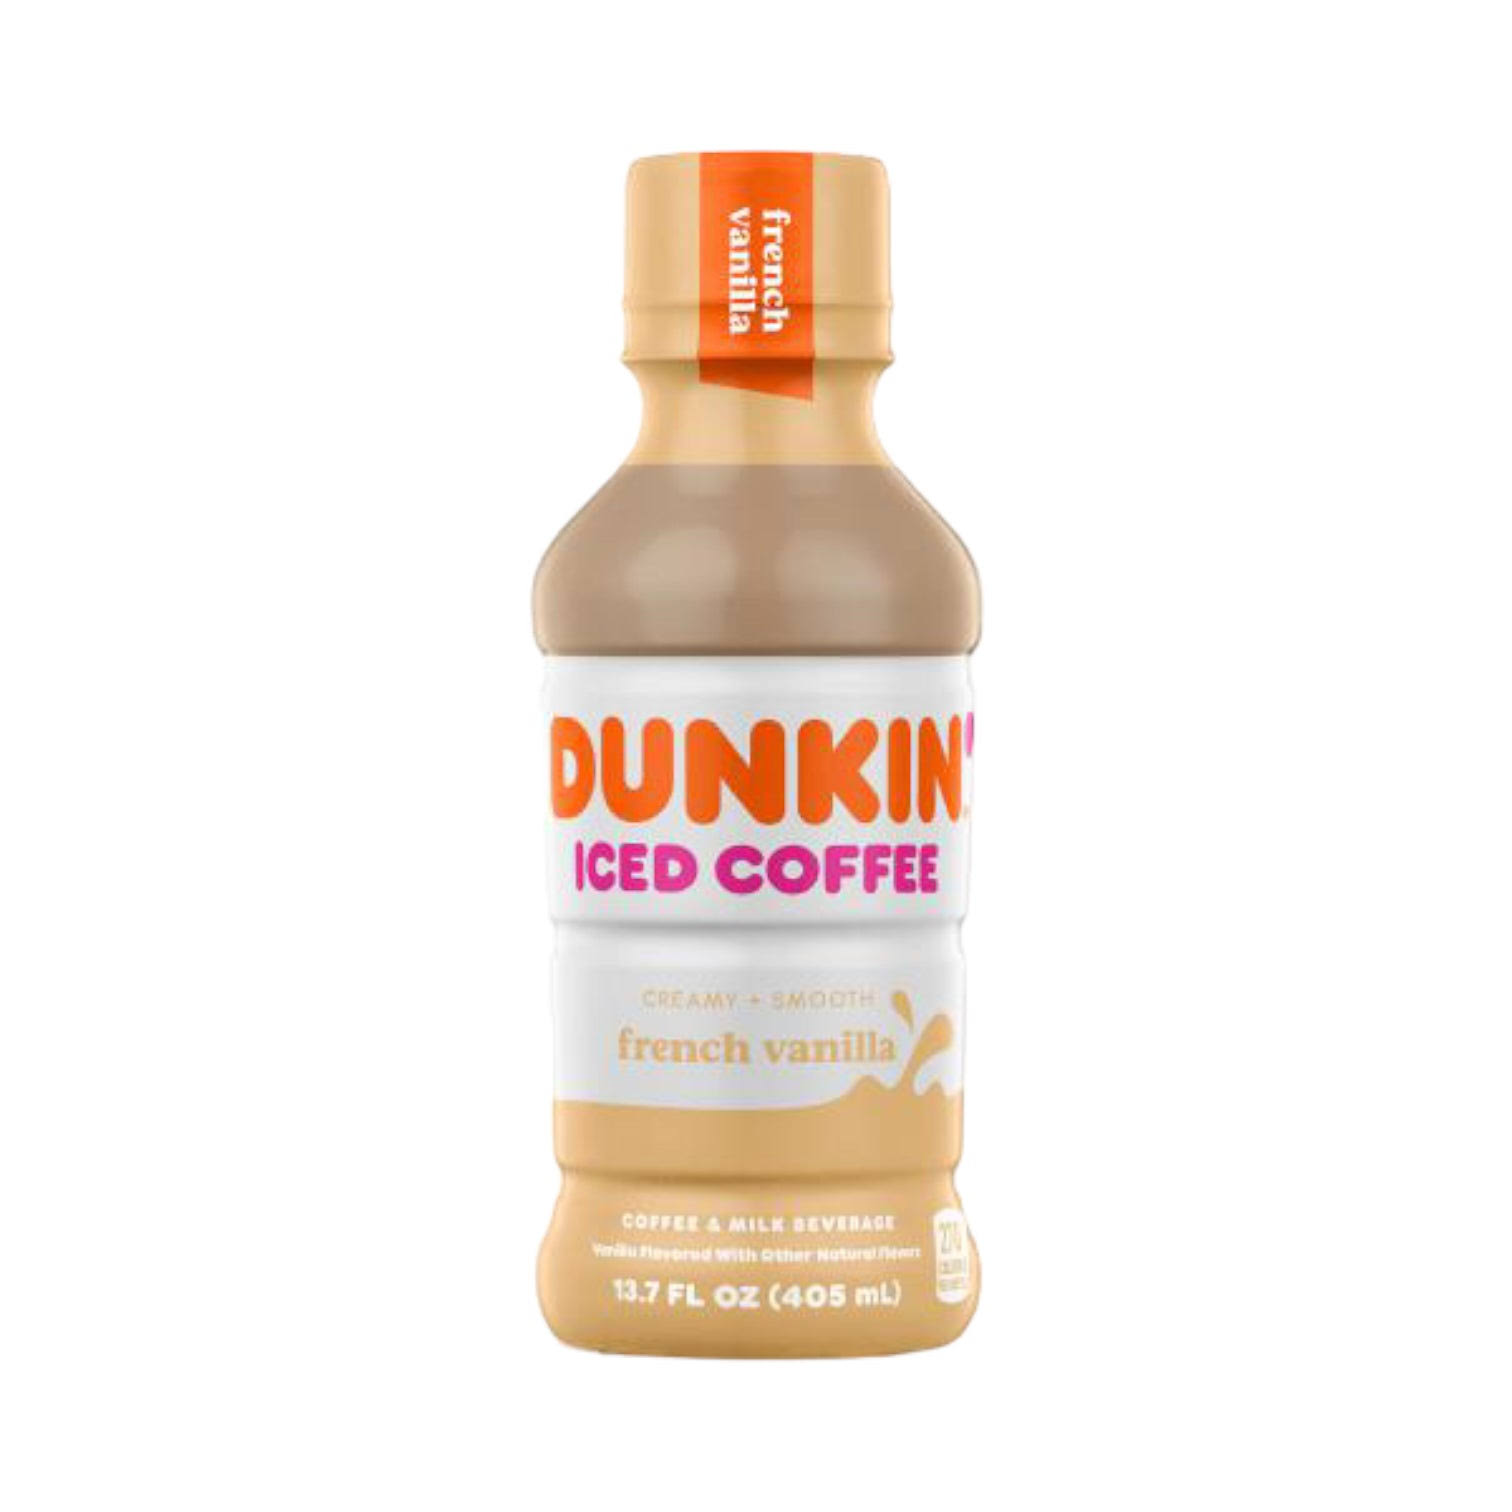 Dunkin Donuts French Vanilla Iced Coffee Bottle, 13.7 fl oz